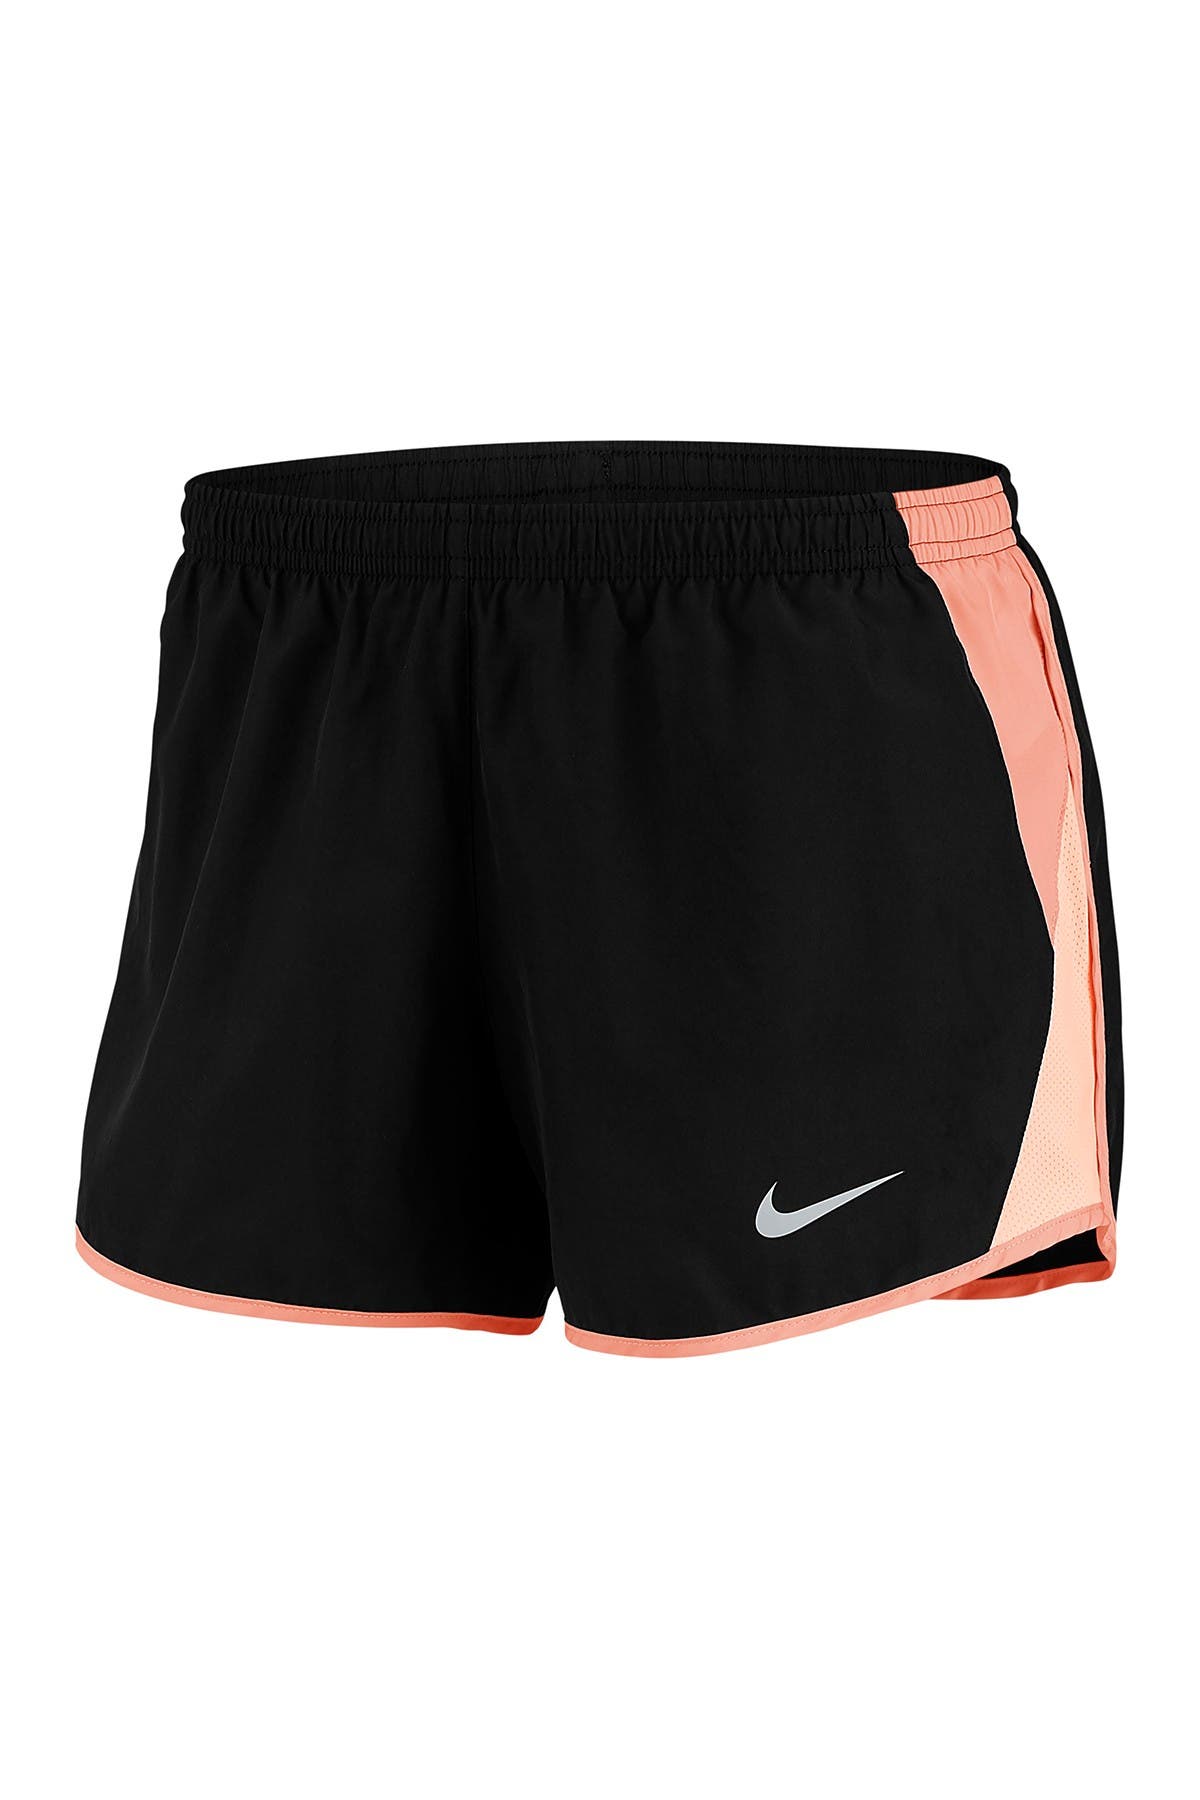 Nike 10k Dri-fit Running Shorts In Open Grey27